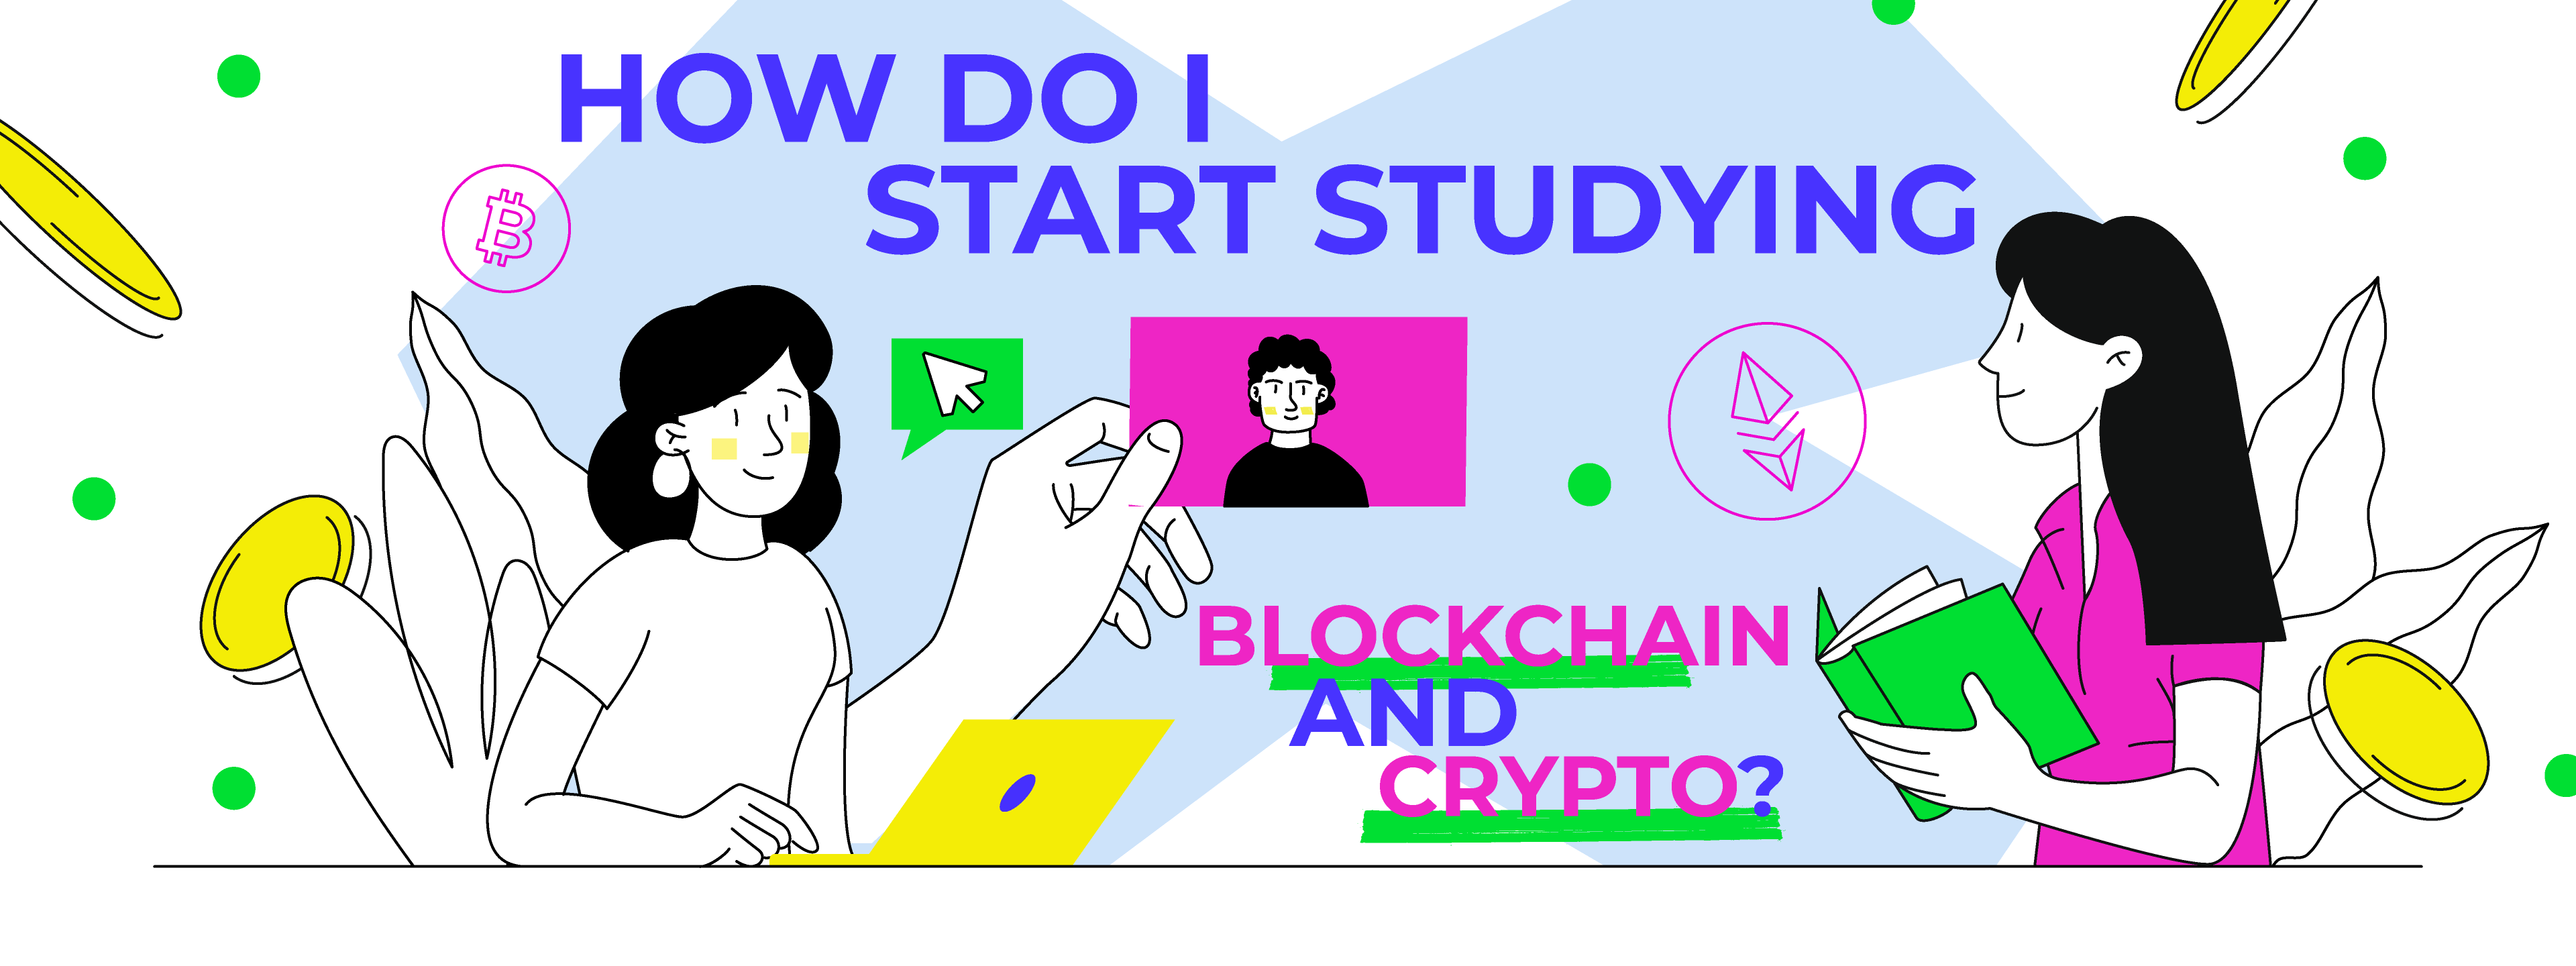 How do I start studying blockchain and crypto?